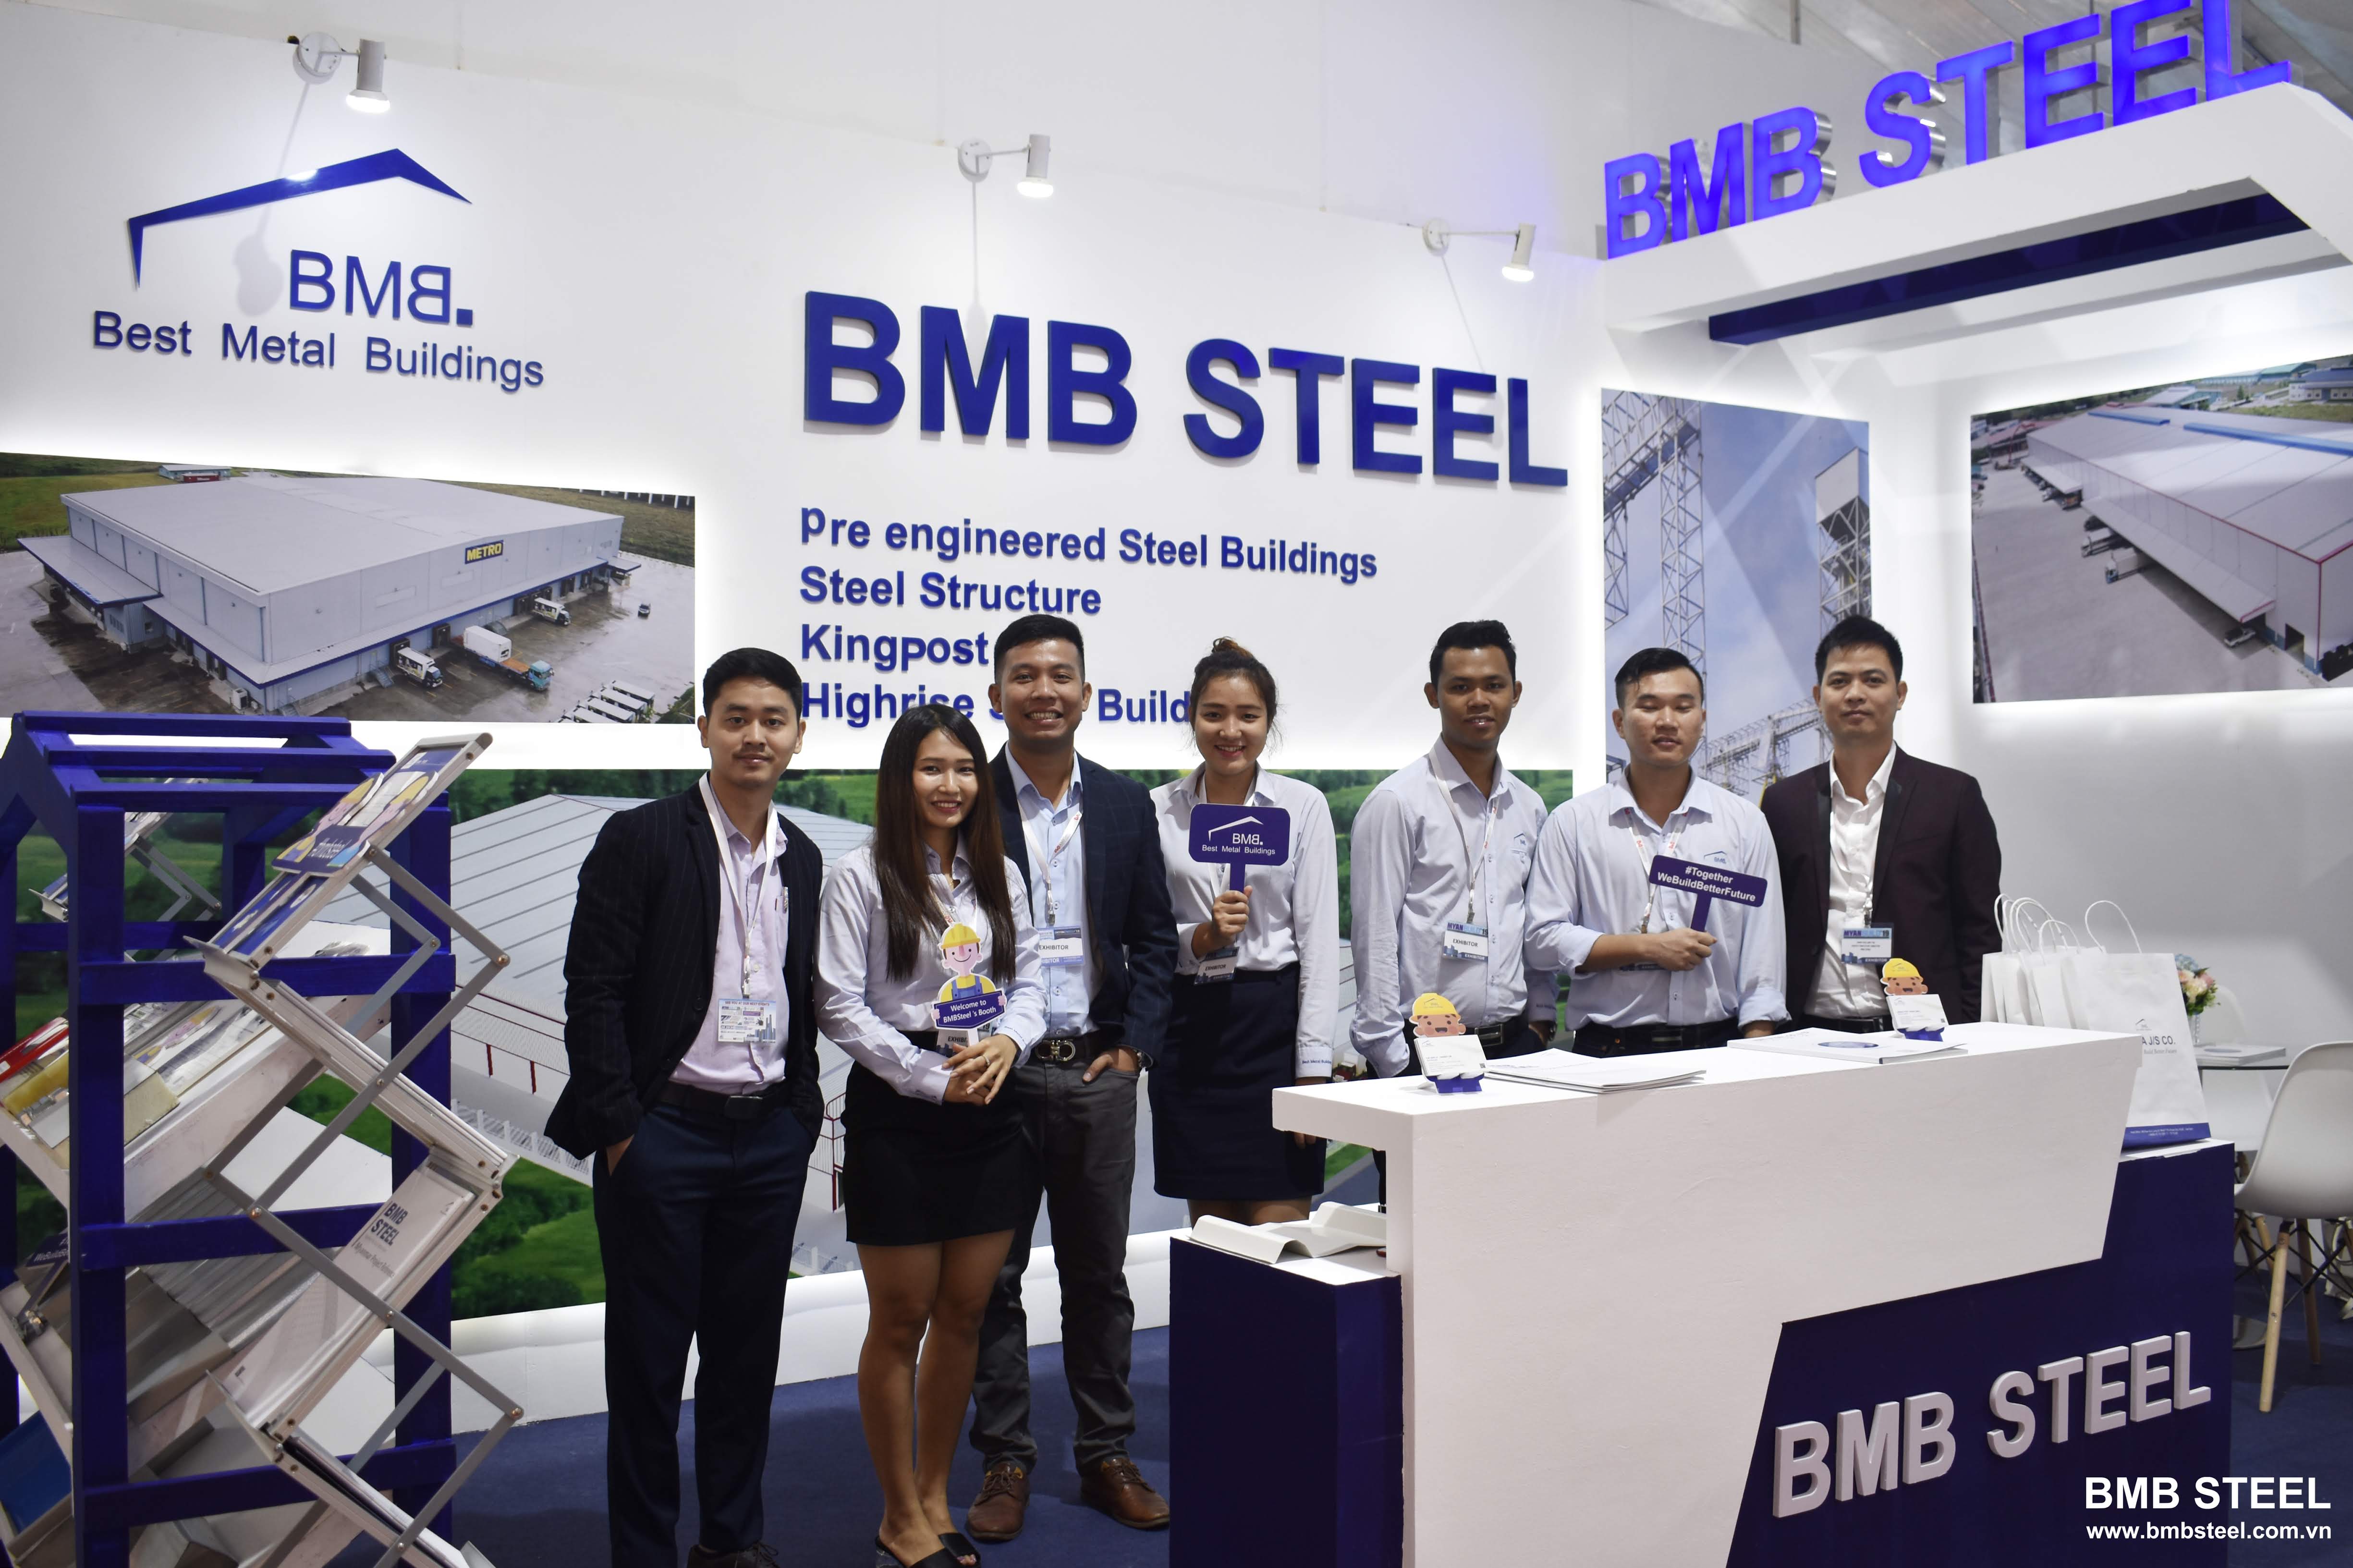 BMB STEEL PARTICIPATED IN MYANBUILD 2019 IN YANGON, MYANMAR